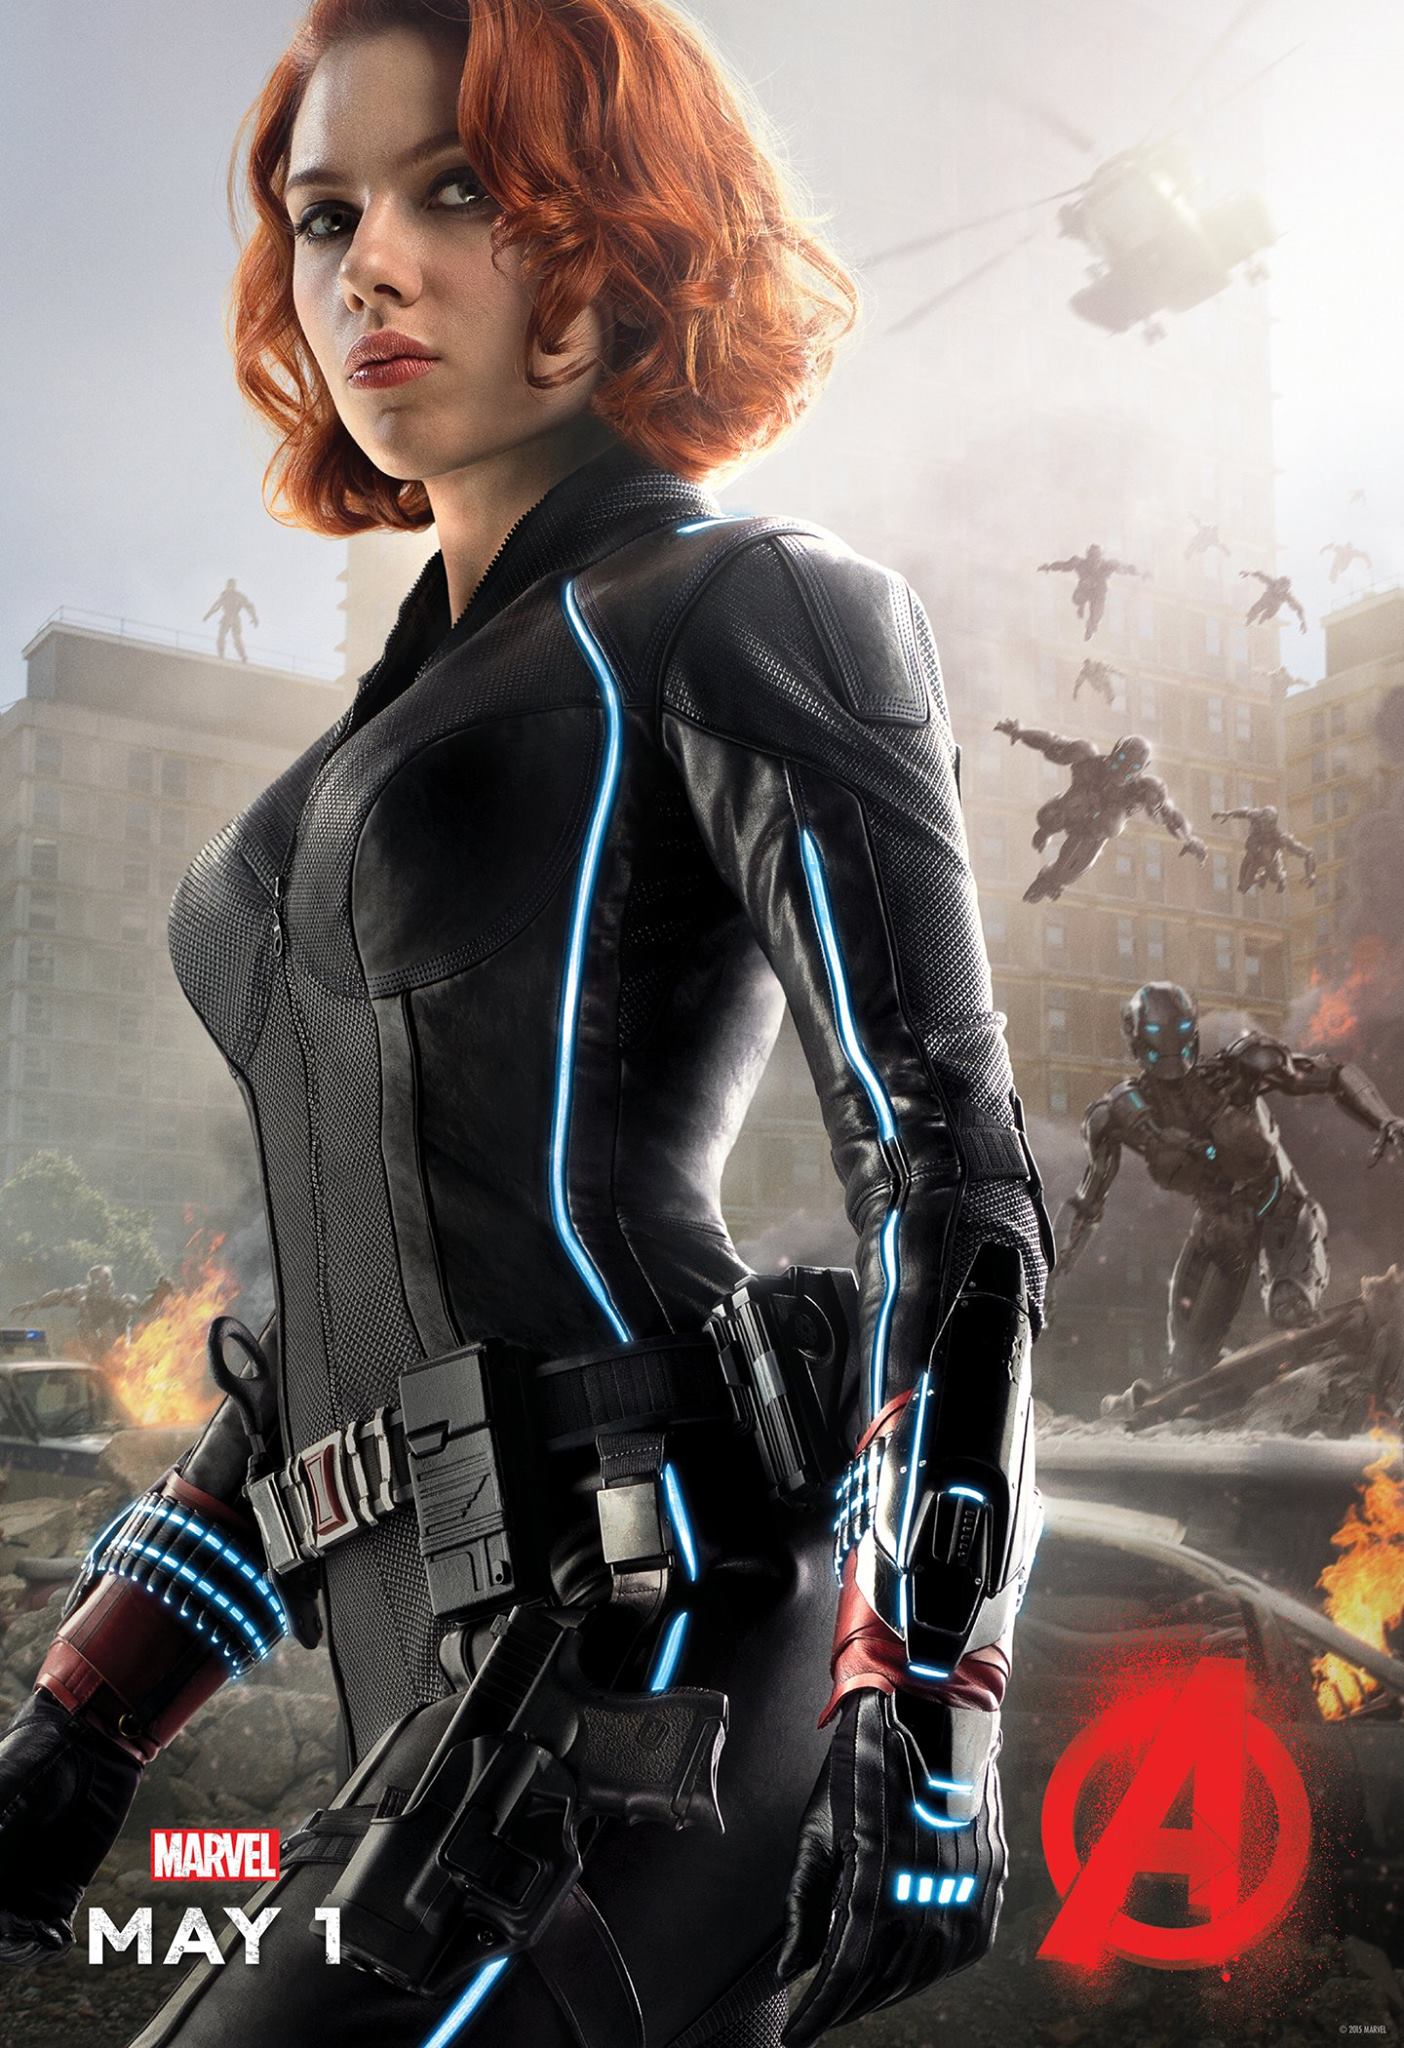 Avengers-Age-of-Ultron-Poster-Black_Widow.jpg